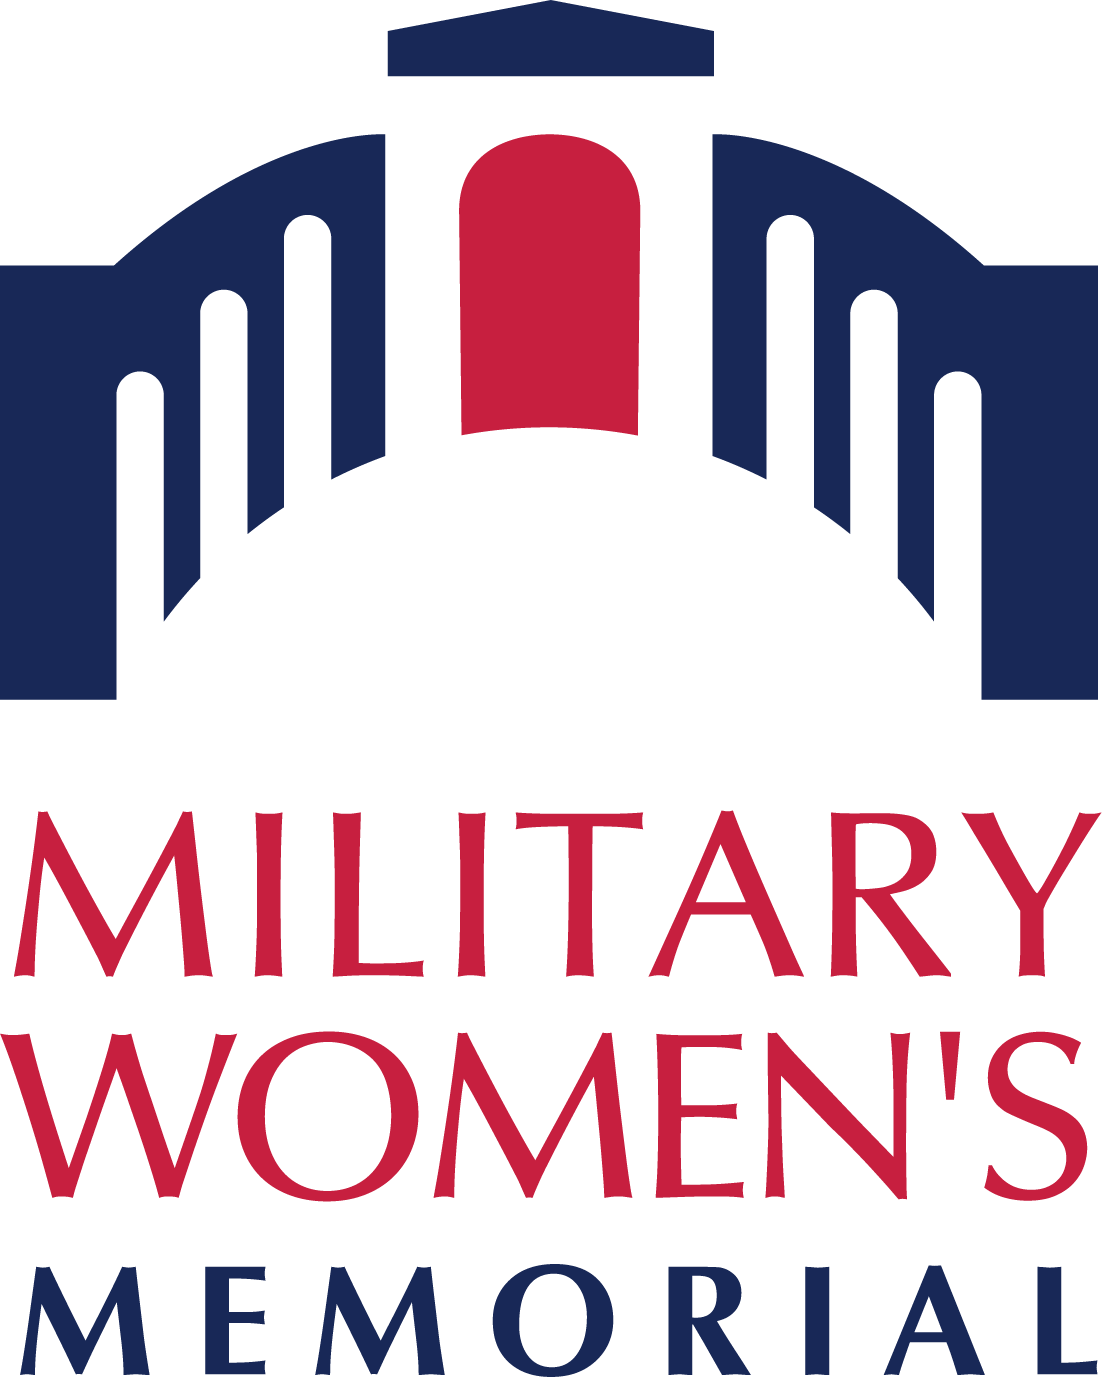 Military Women's Memorial graphic image